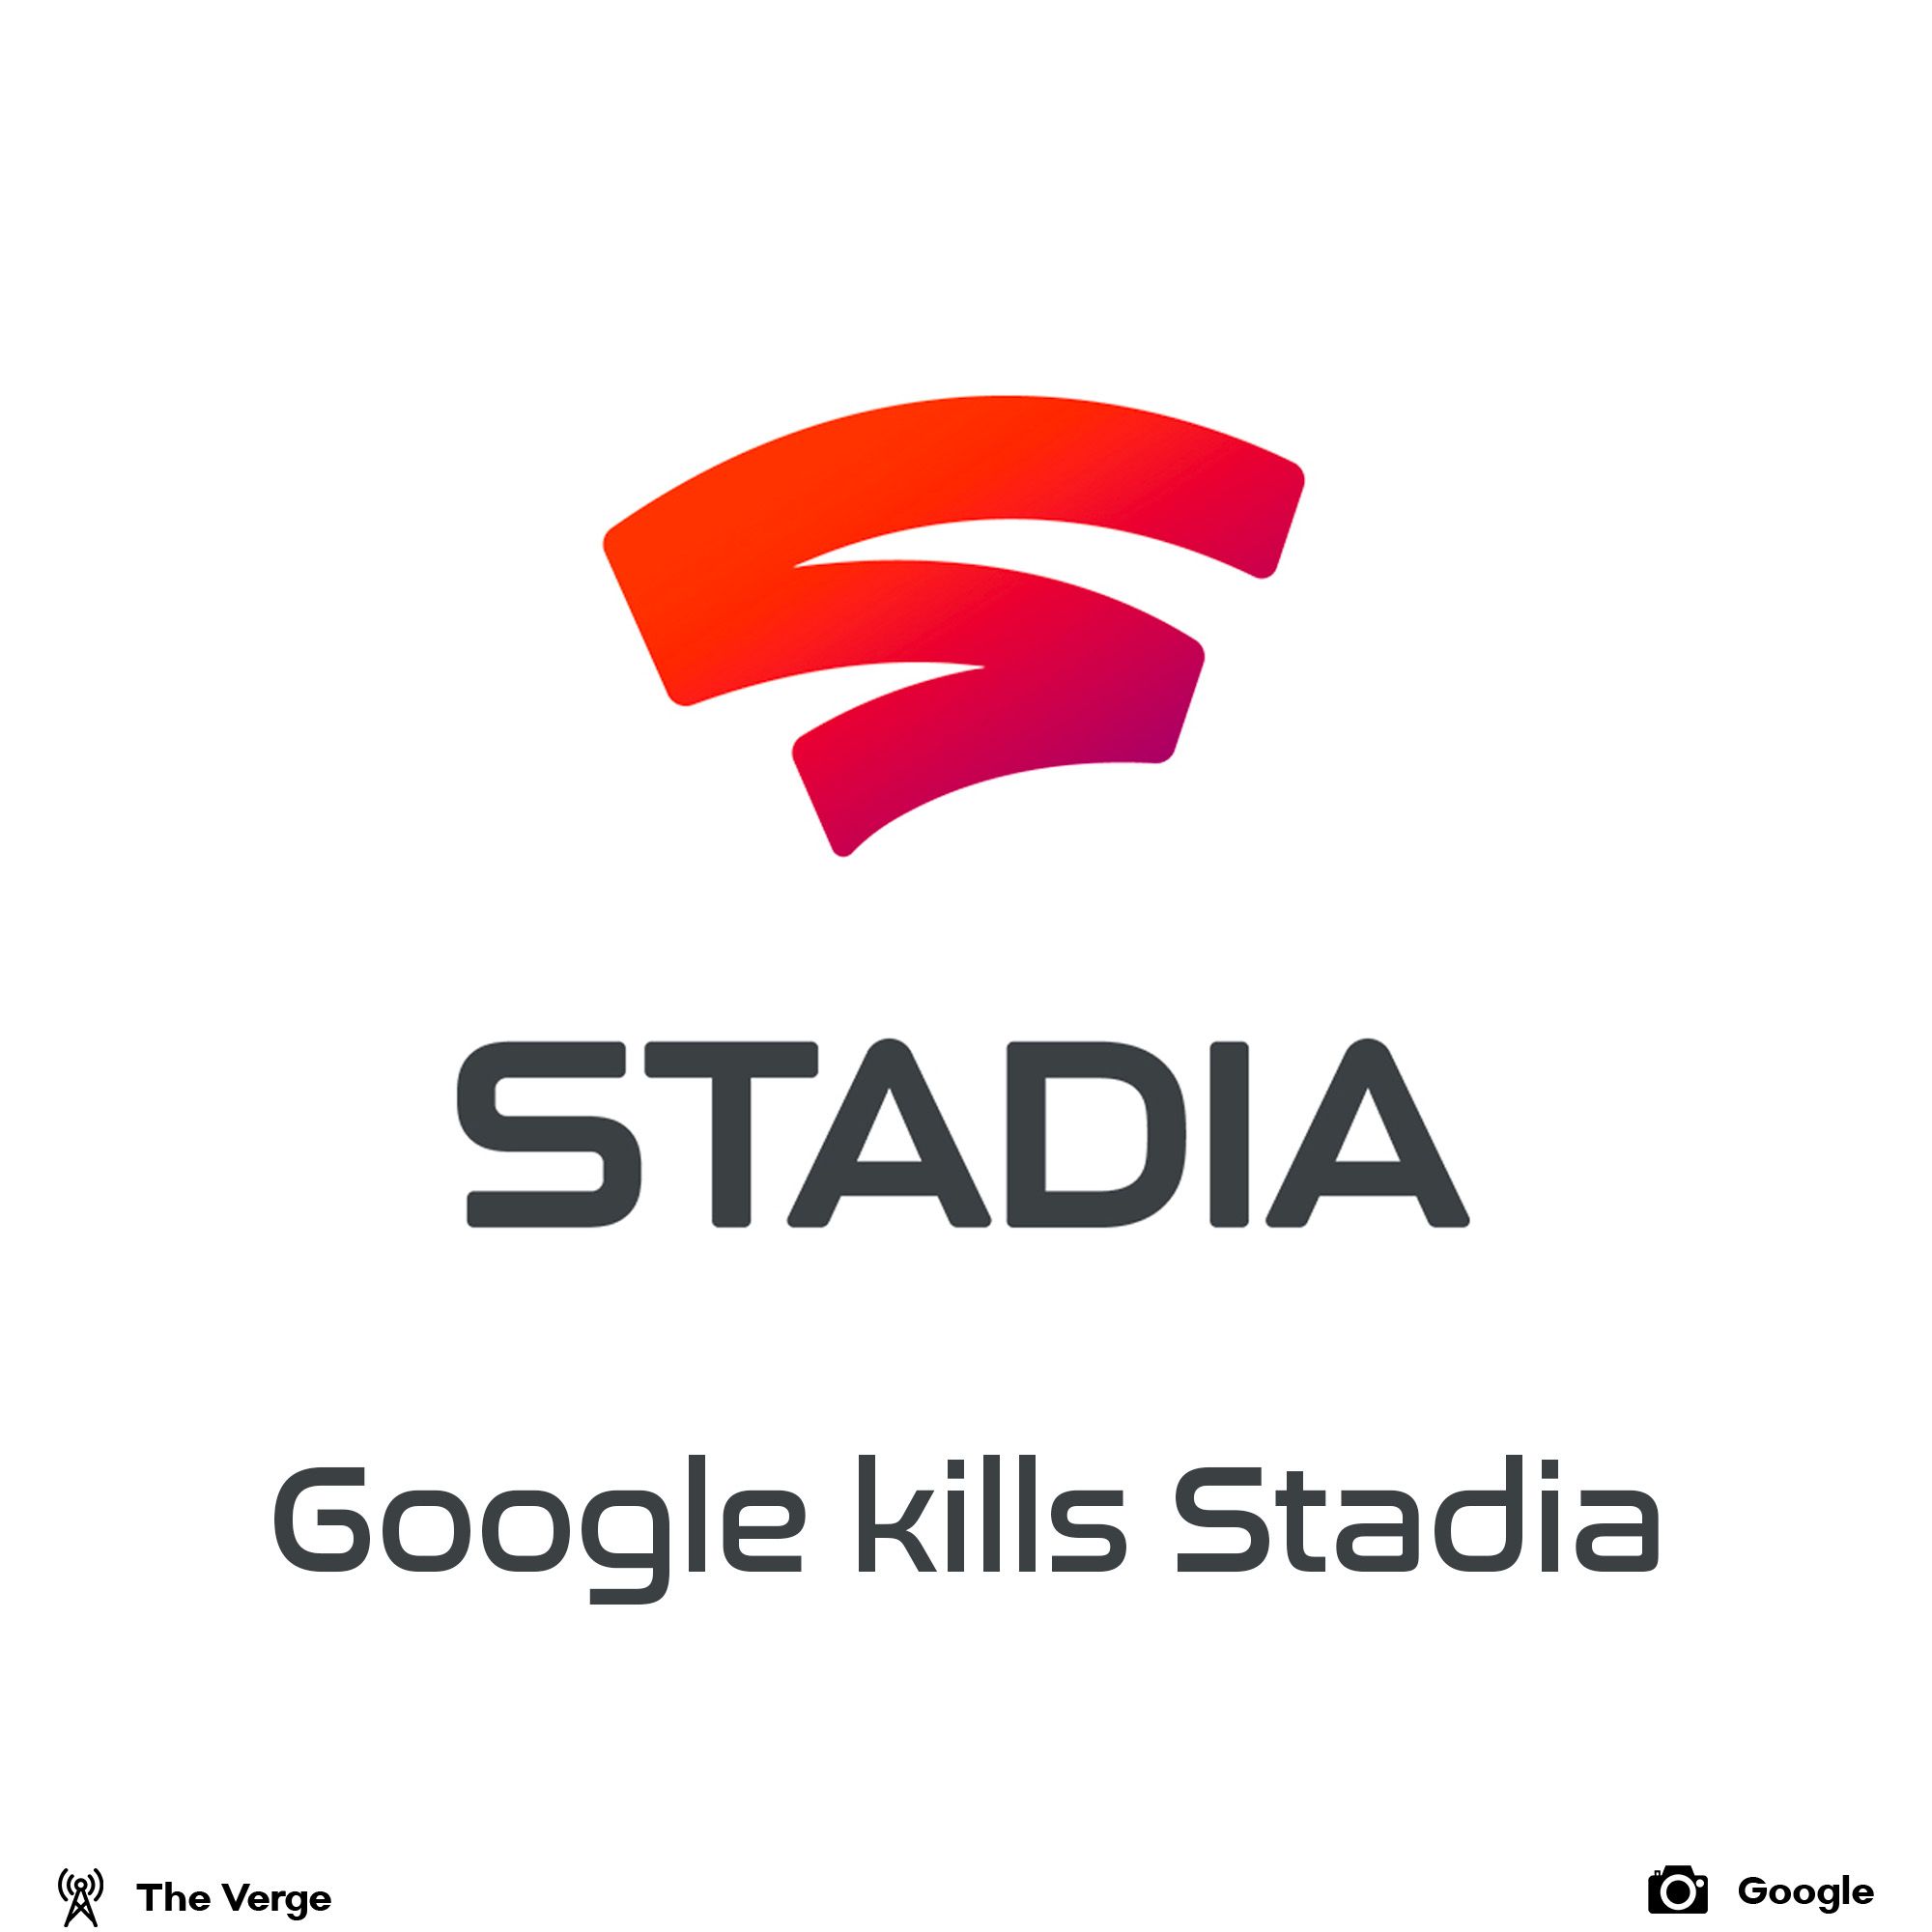 Google kills Stadia